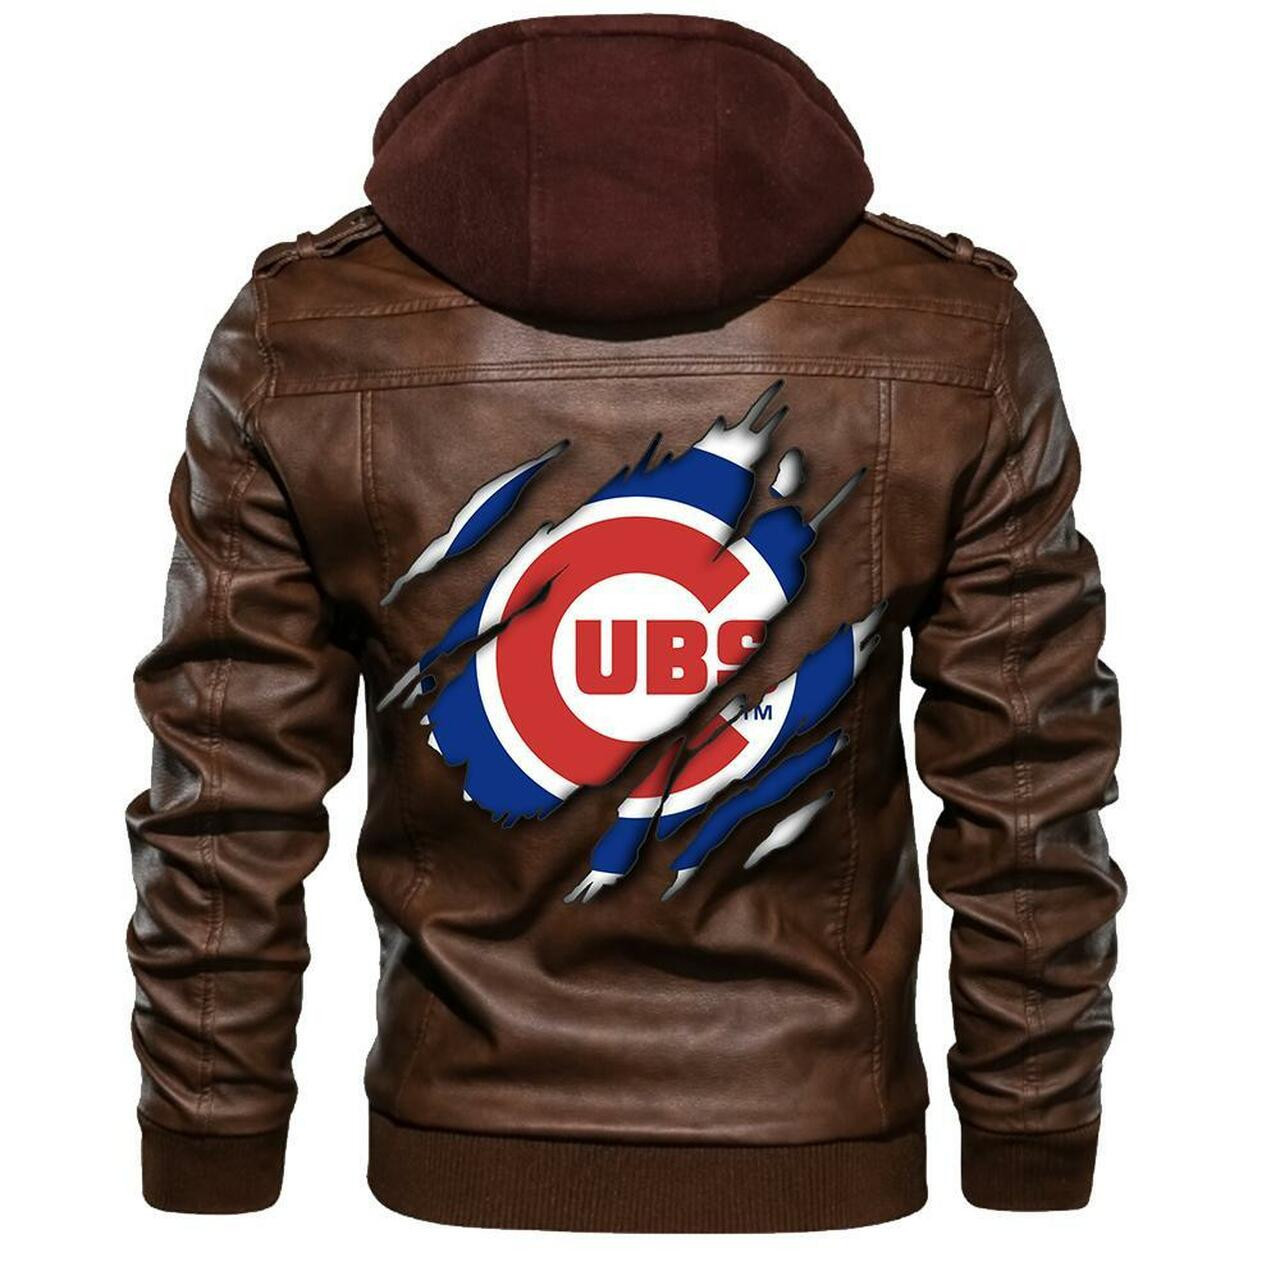 Top leather jacket Sells Best on Techcomshop 163